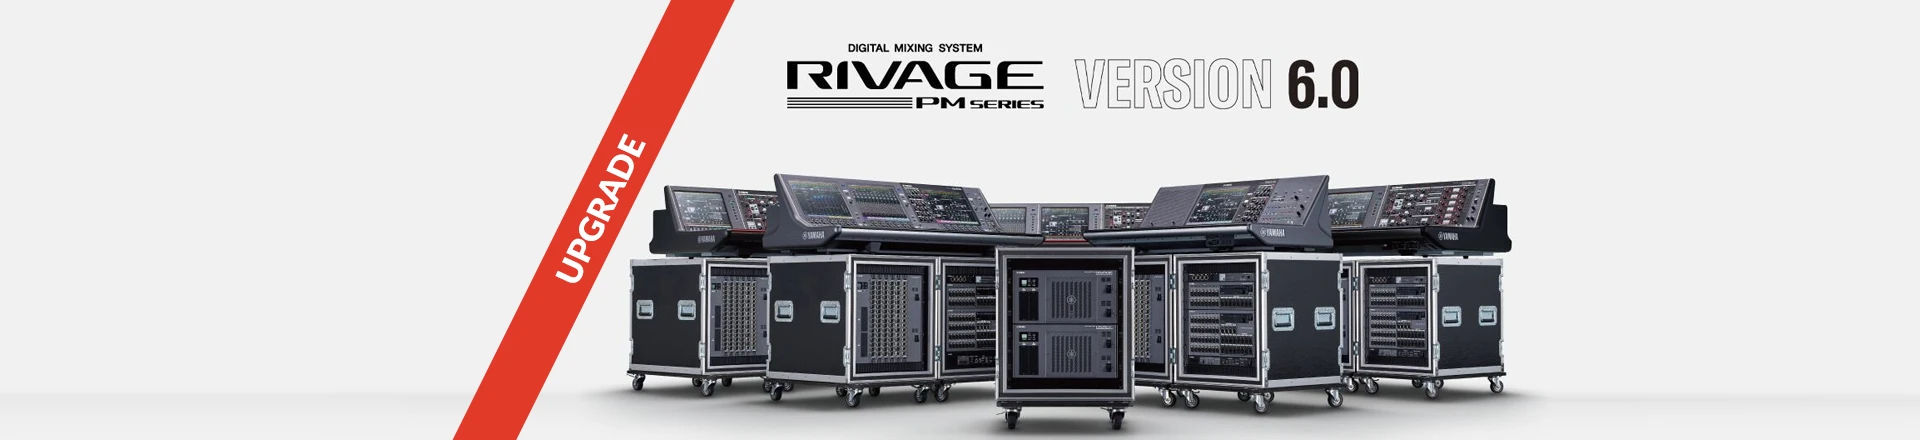 Nowy firmware do cyfrowych systemów miksowania Yamaha Rivage PM